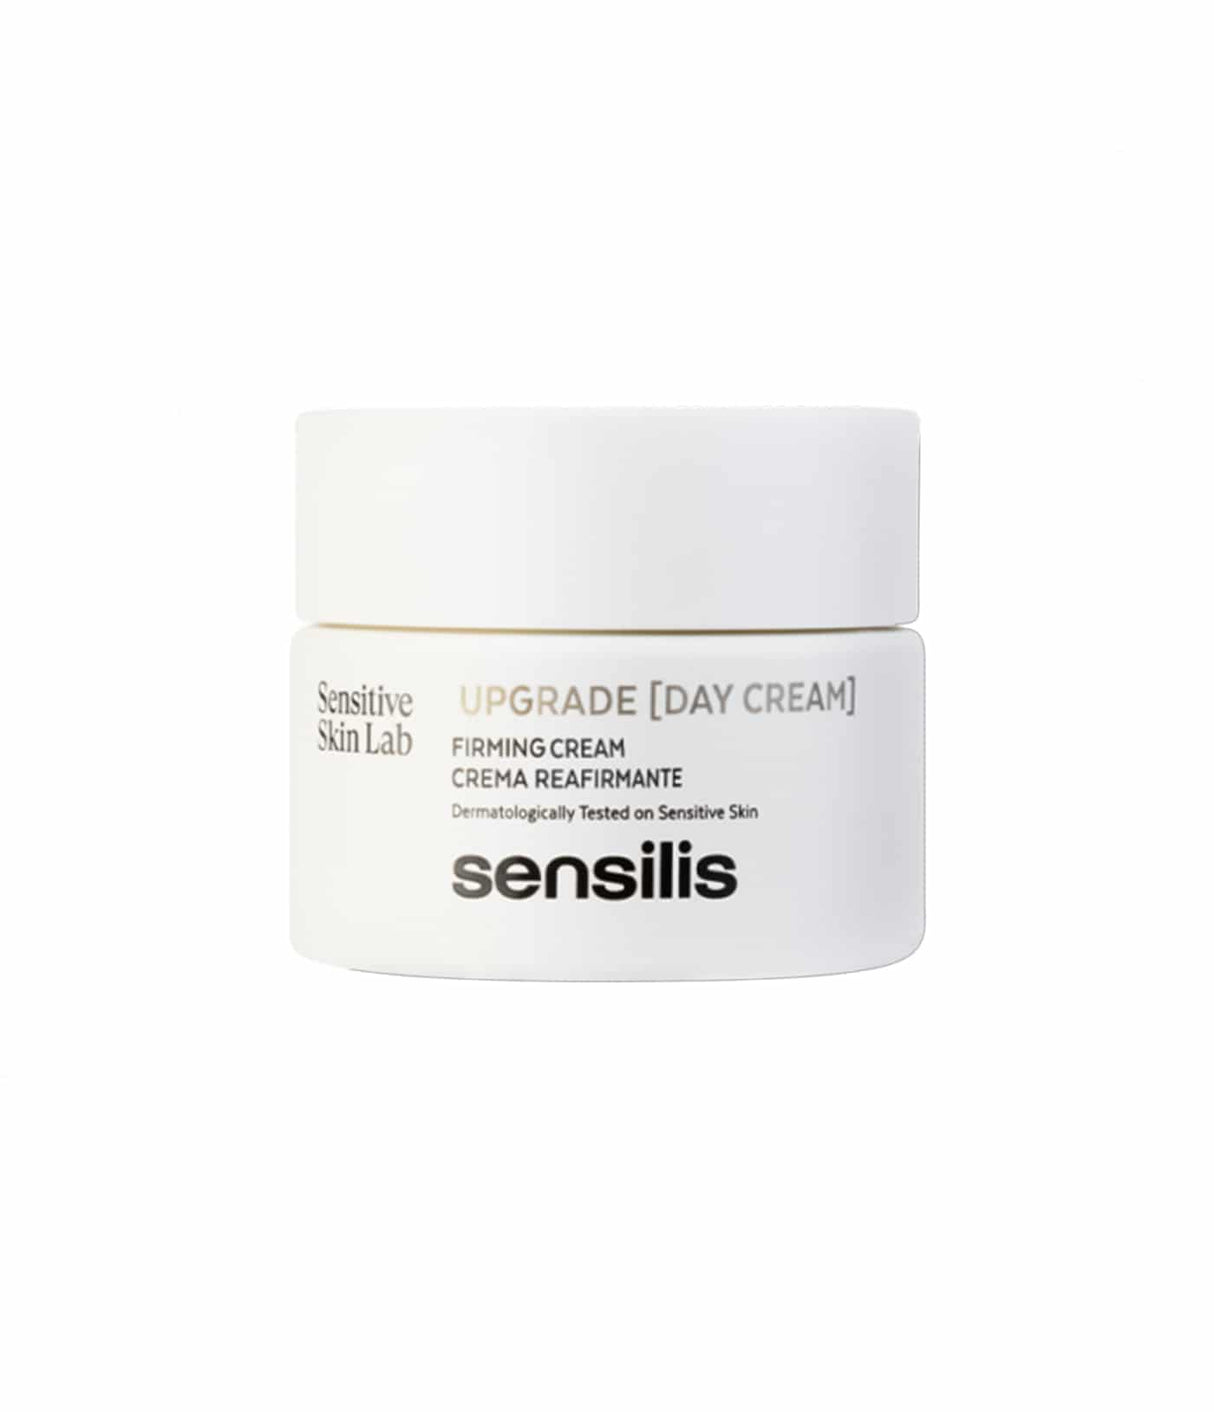 Upgrade [Day Cream] de Sensilis